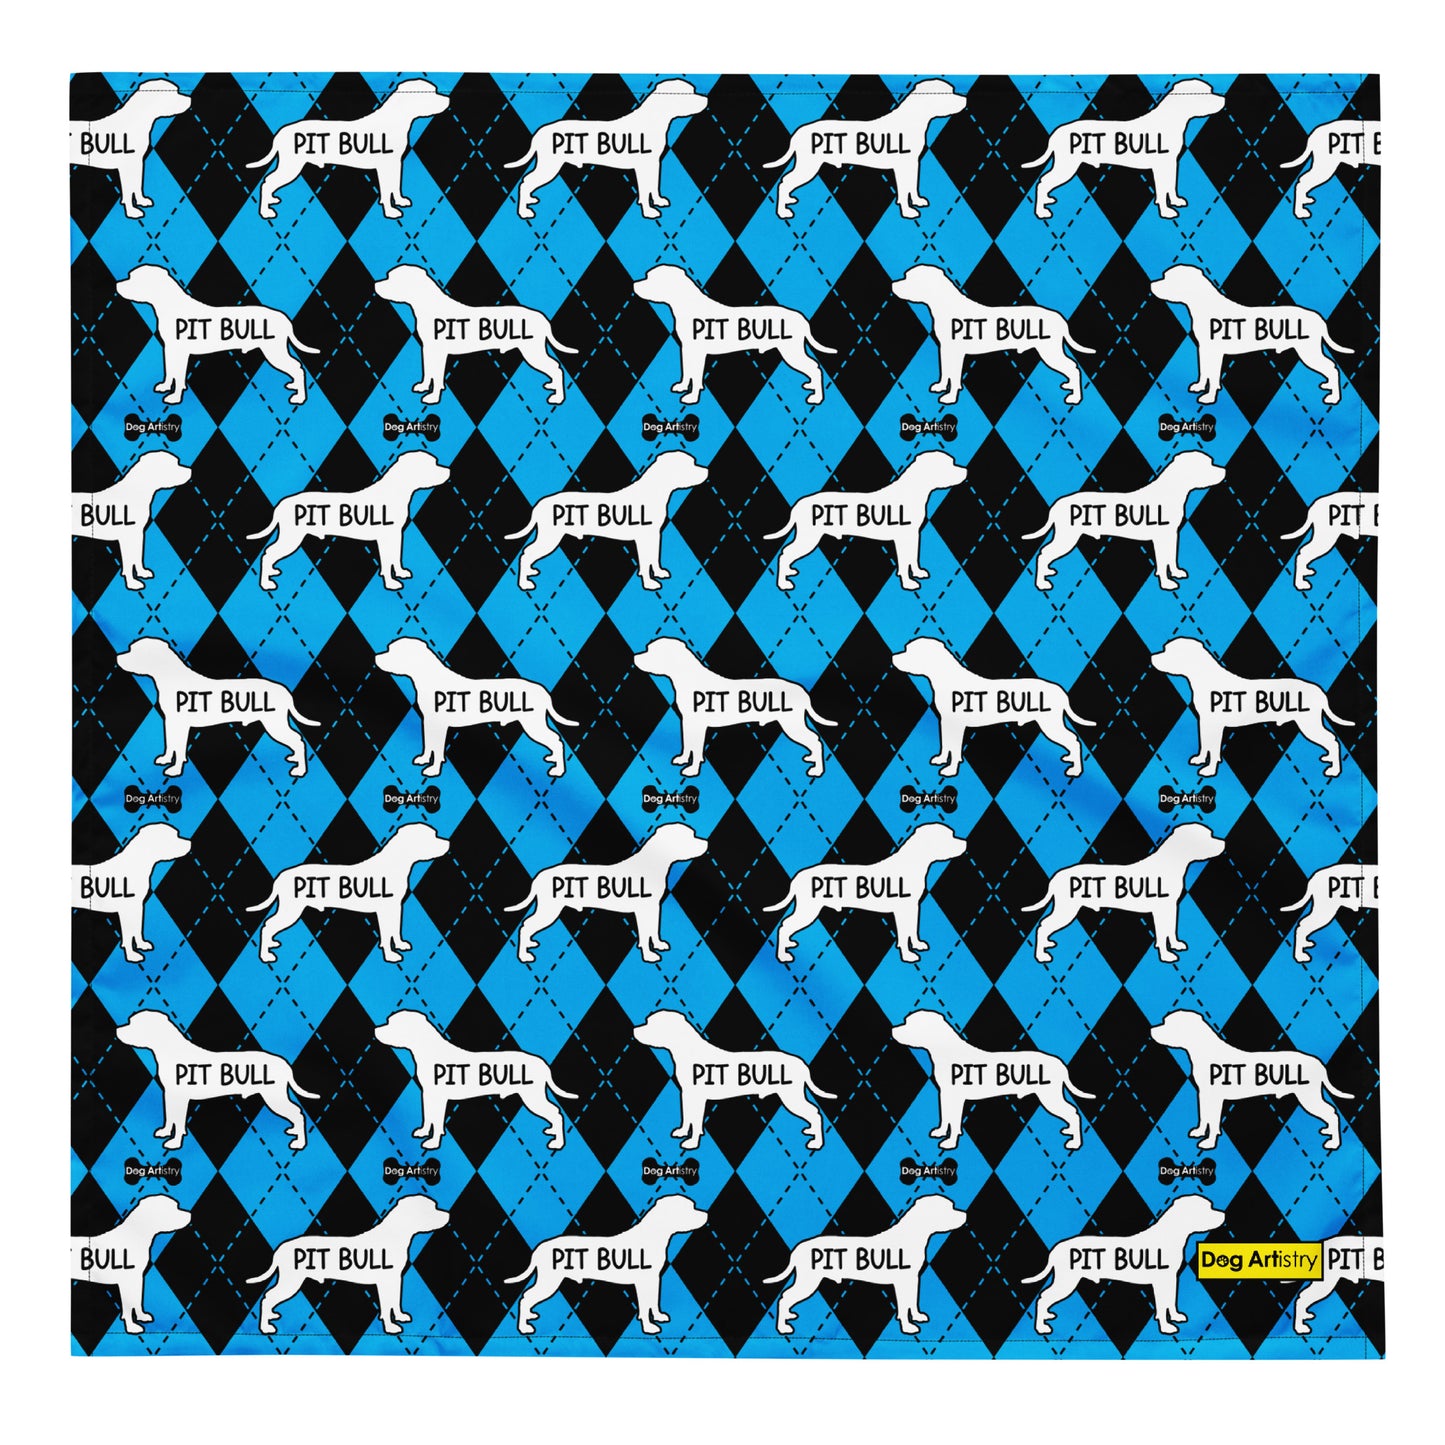 Pit Bull Argyle Blue and Black All-over print bandana